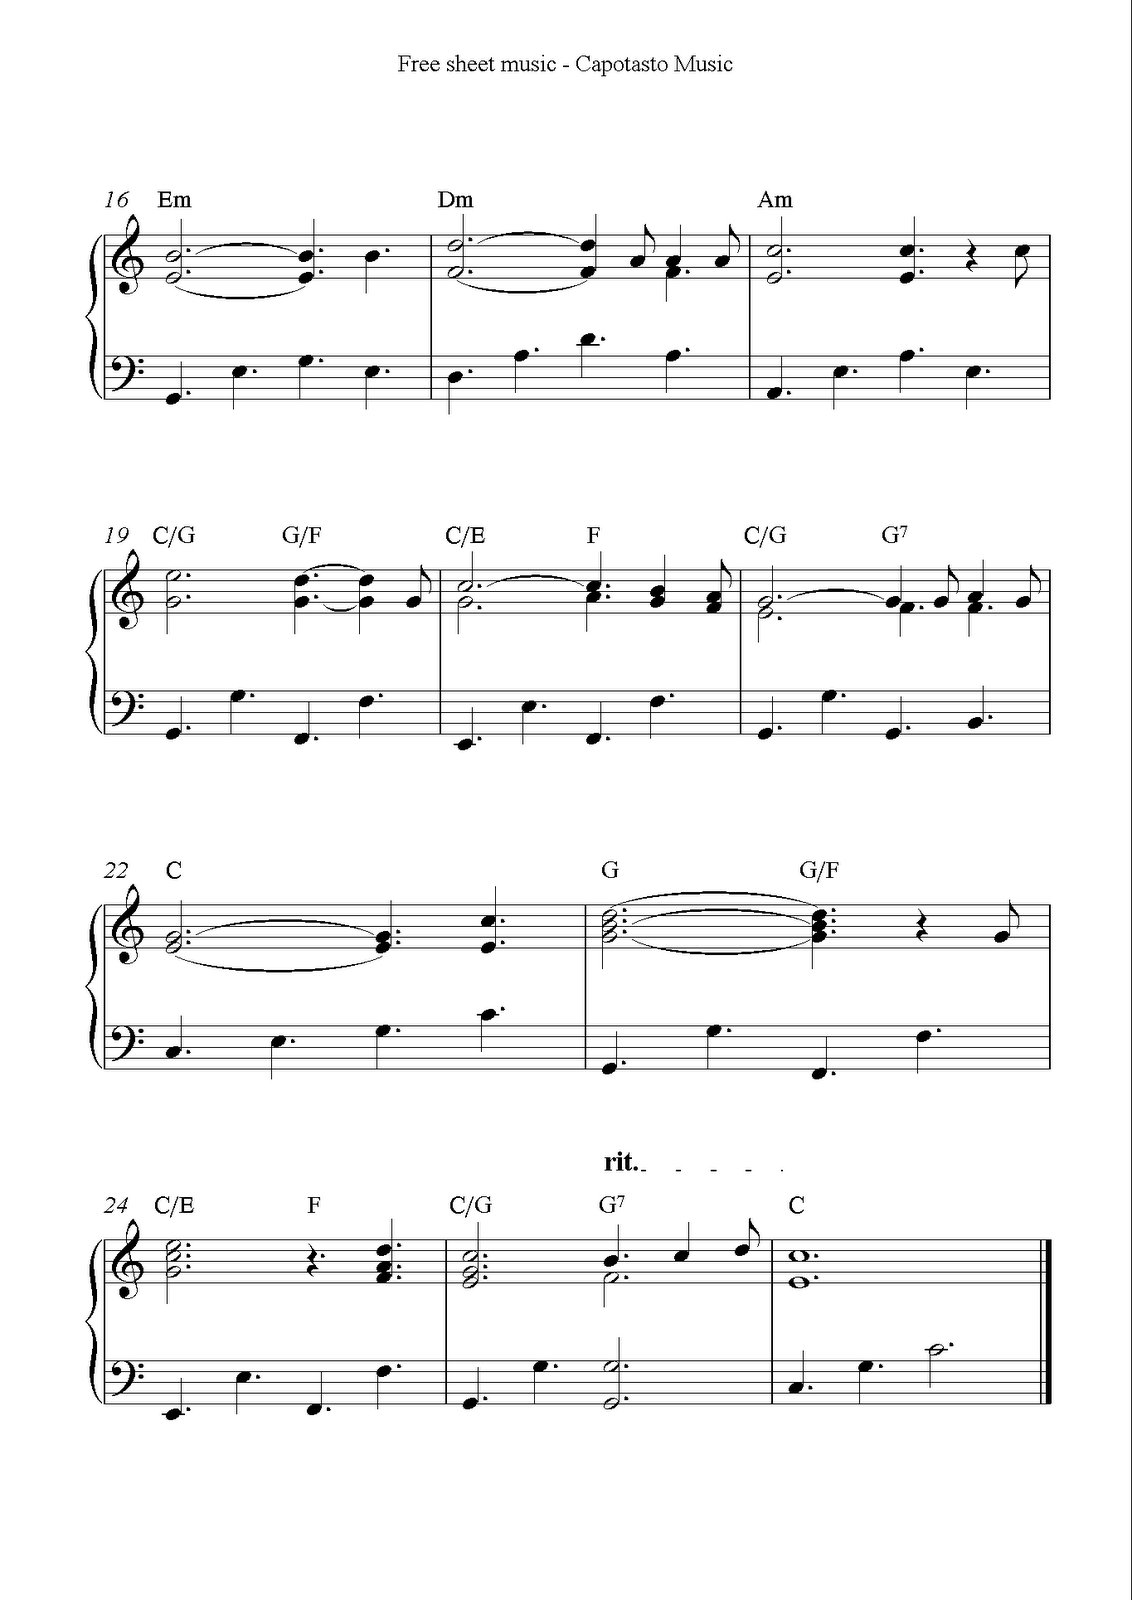 Free Sheet Music Scores: Free Easy Christmas Piano Sheet Music, O - Christmas Songs Piano Sheet Music Free Printable